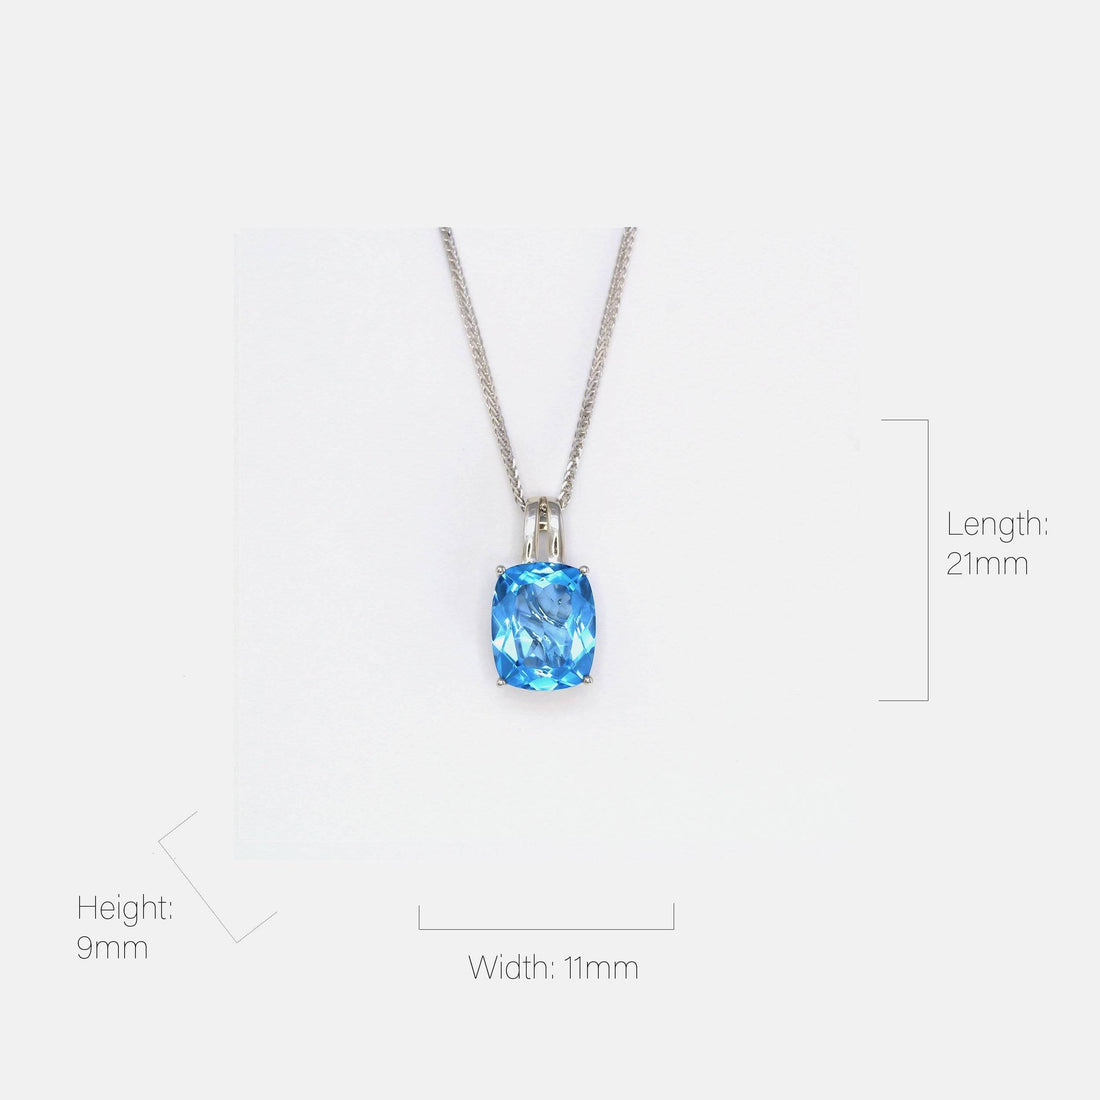 Baikalla Jewelry Gemstone Pendant Necklace 18k White Gold Genuine Cushion Cut Swiss Blue Topaz & Diamonds Pendant Necklace